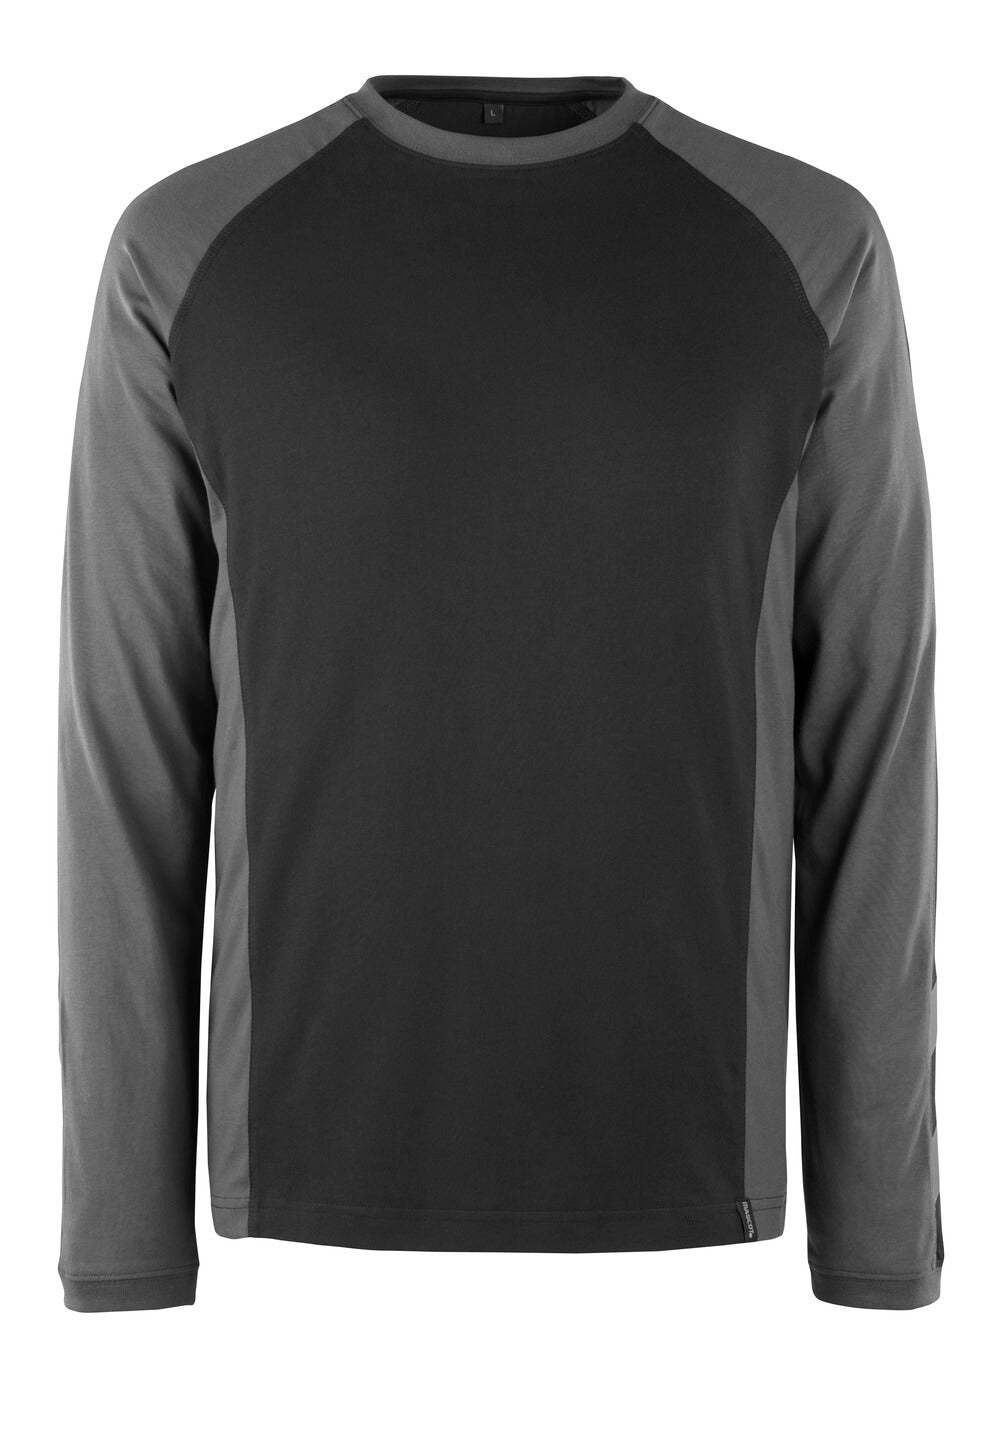 Mascot UNIQUE  Bielefeld T-shirt, long-sleeved 50568 black/dark anthracite